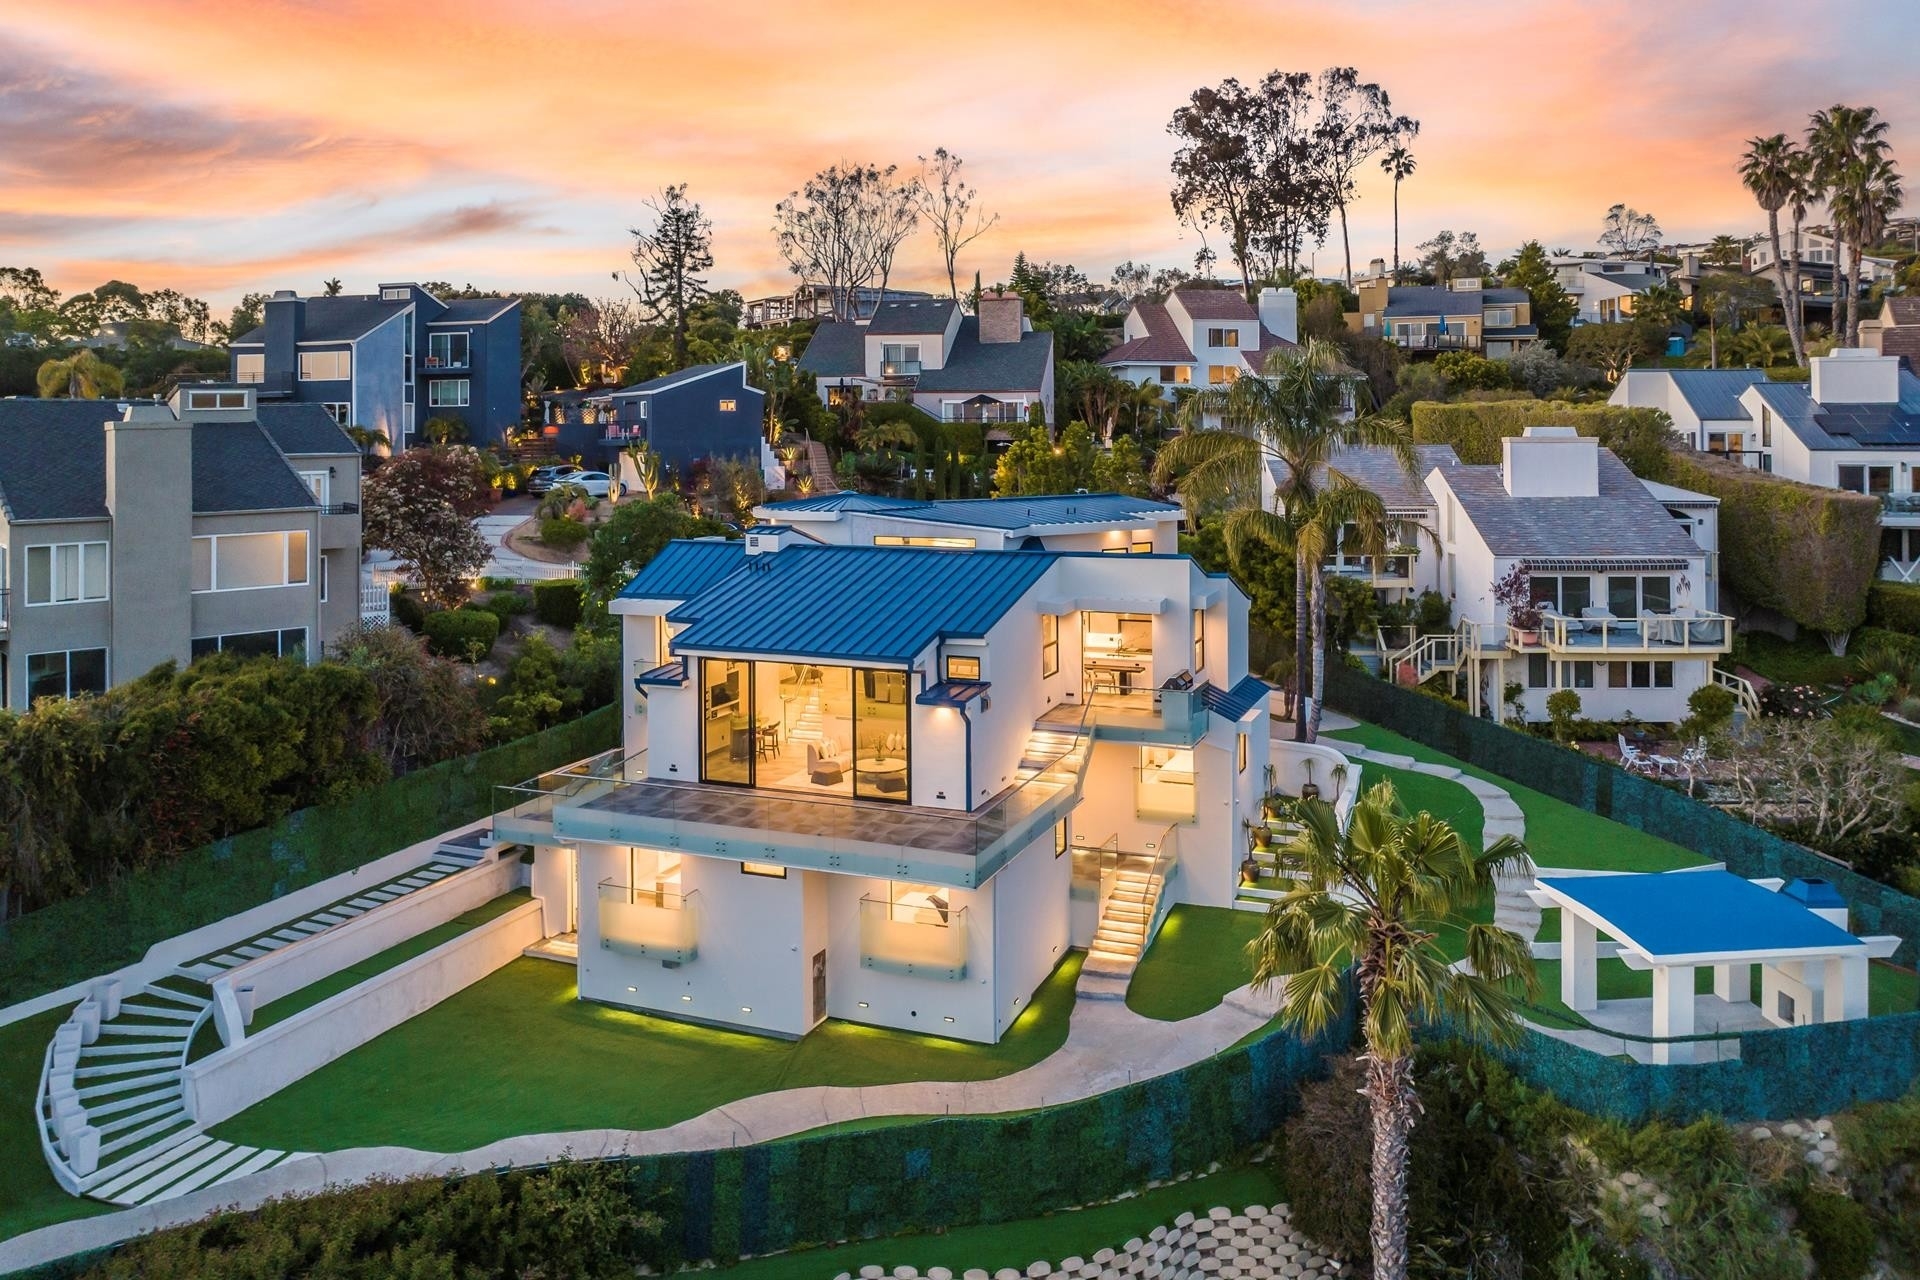 Single Family Home for Sale at Park Avenue Estates, Laguna Beach, CA 92651